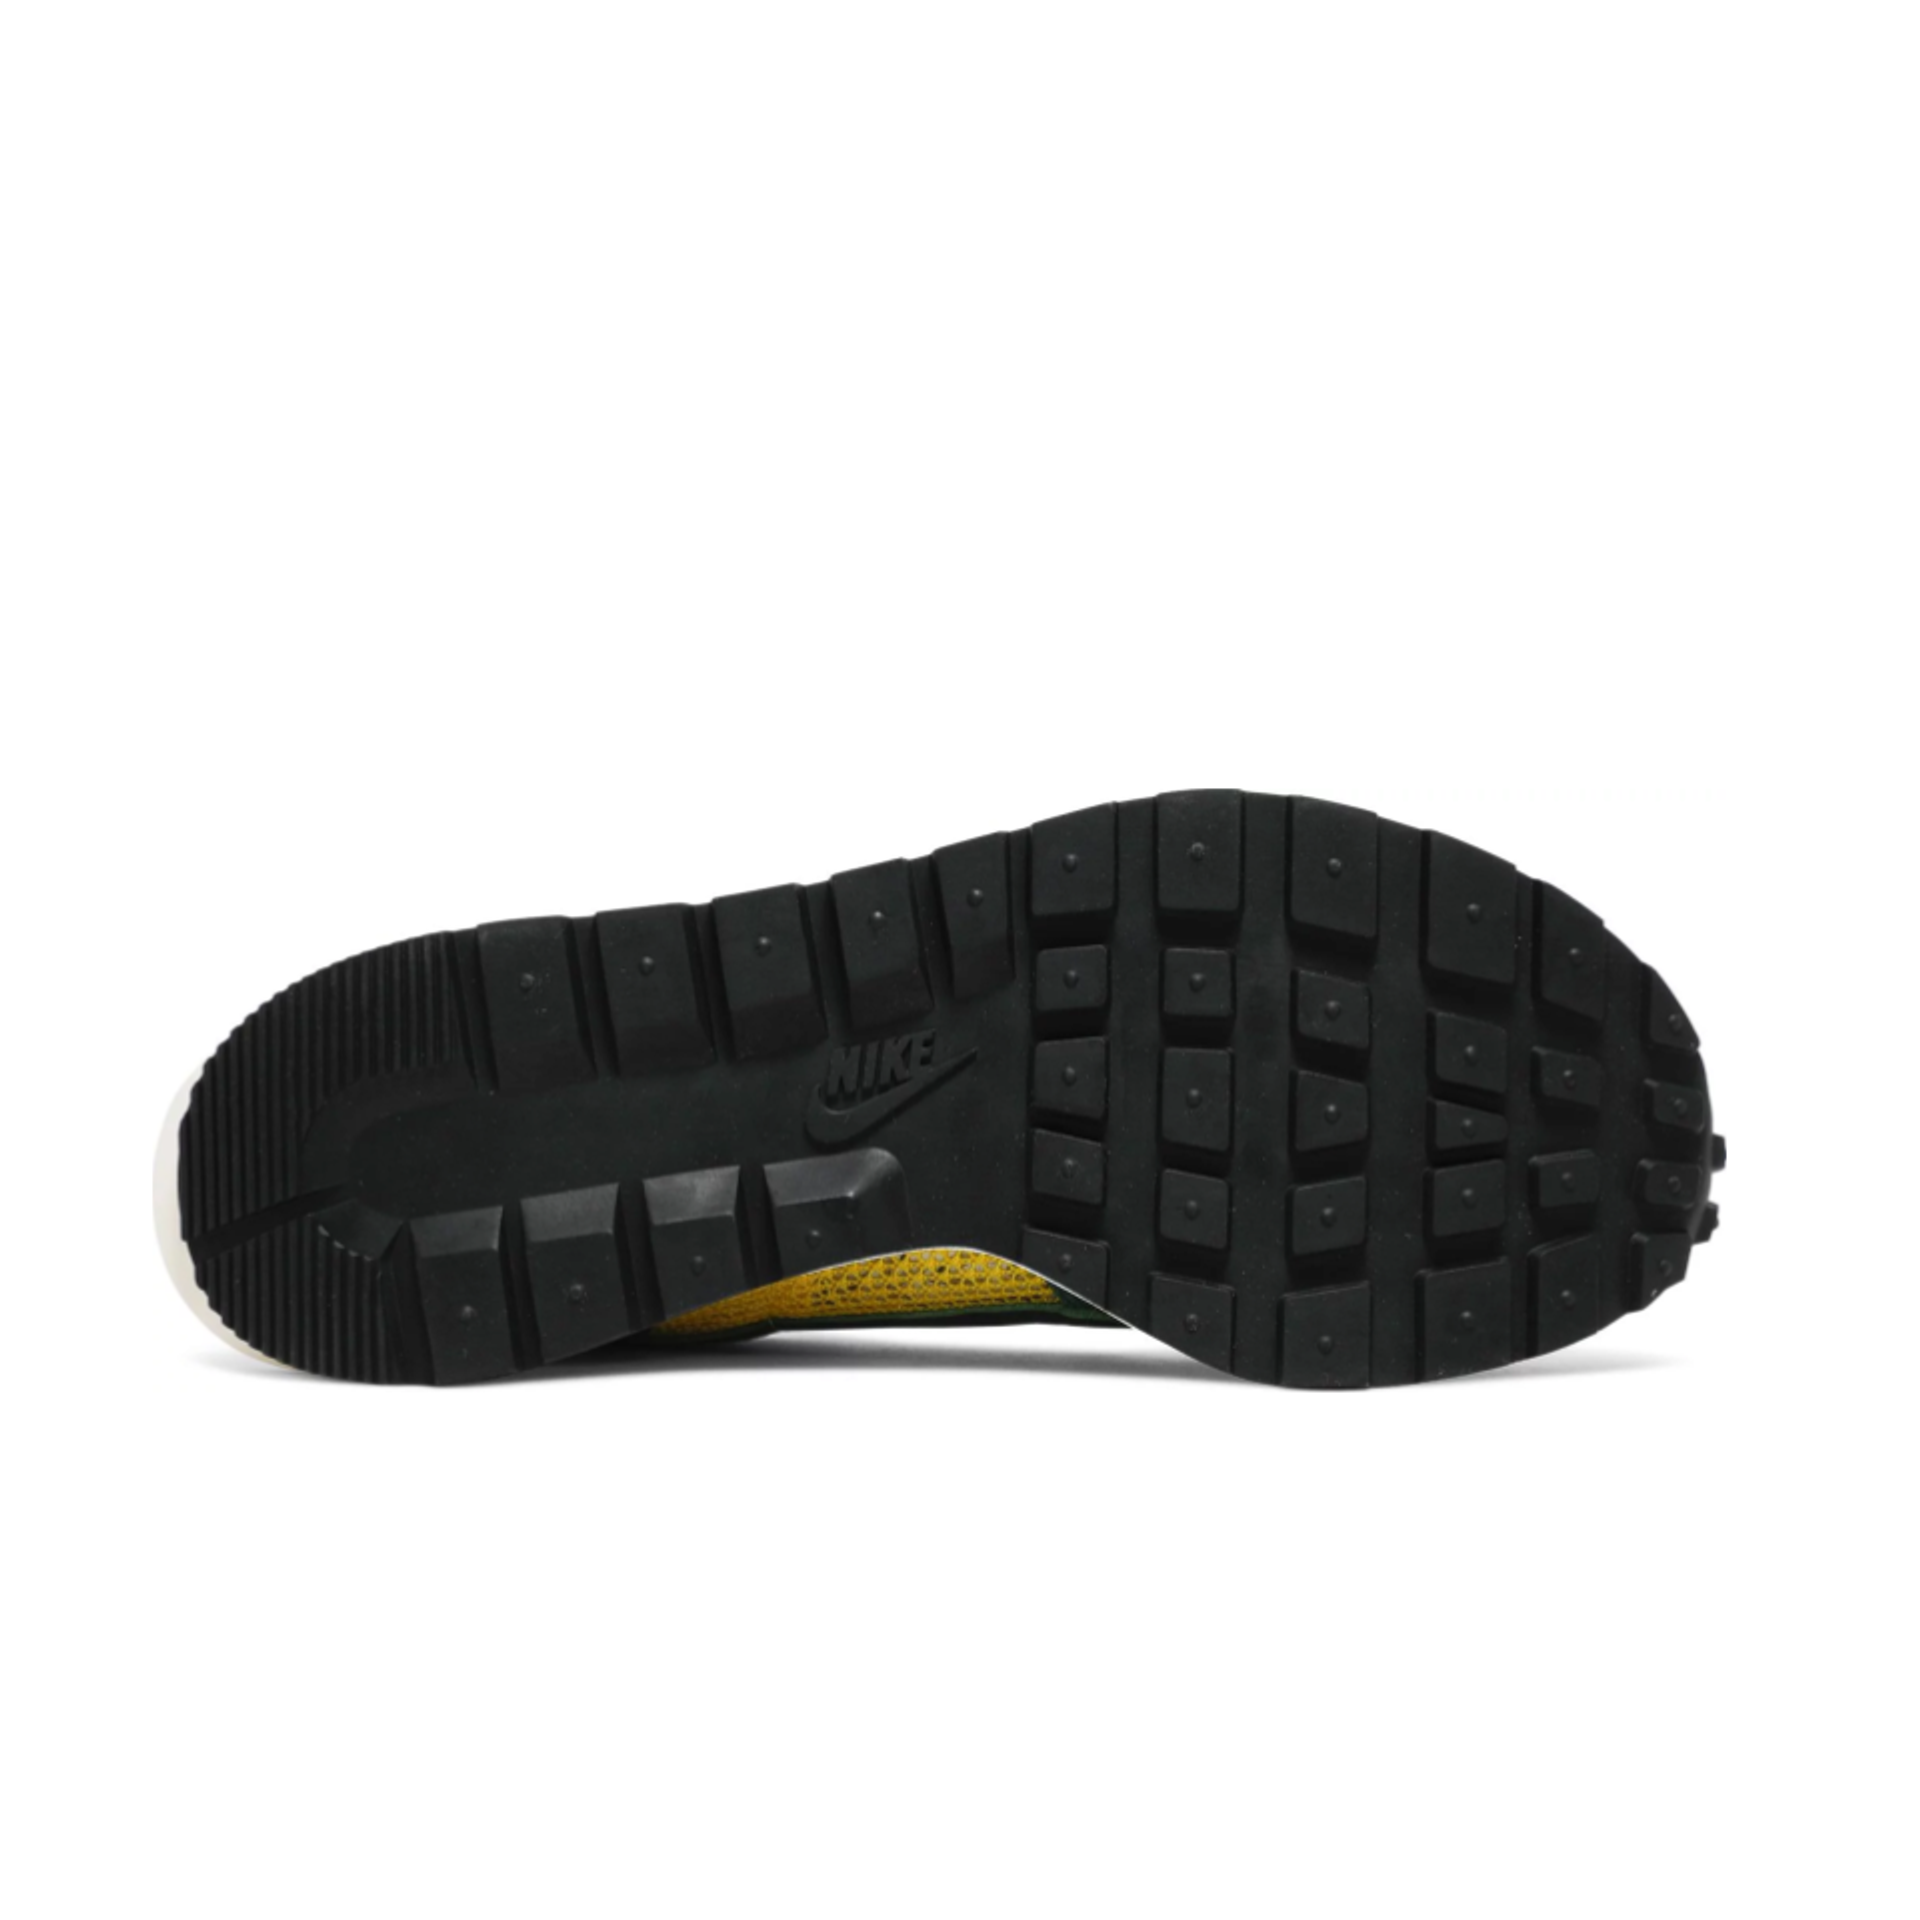 Nike Sacai x VaporWaffle 'Tour Yellow'